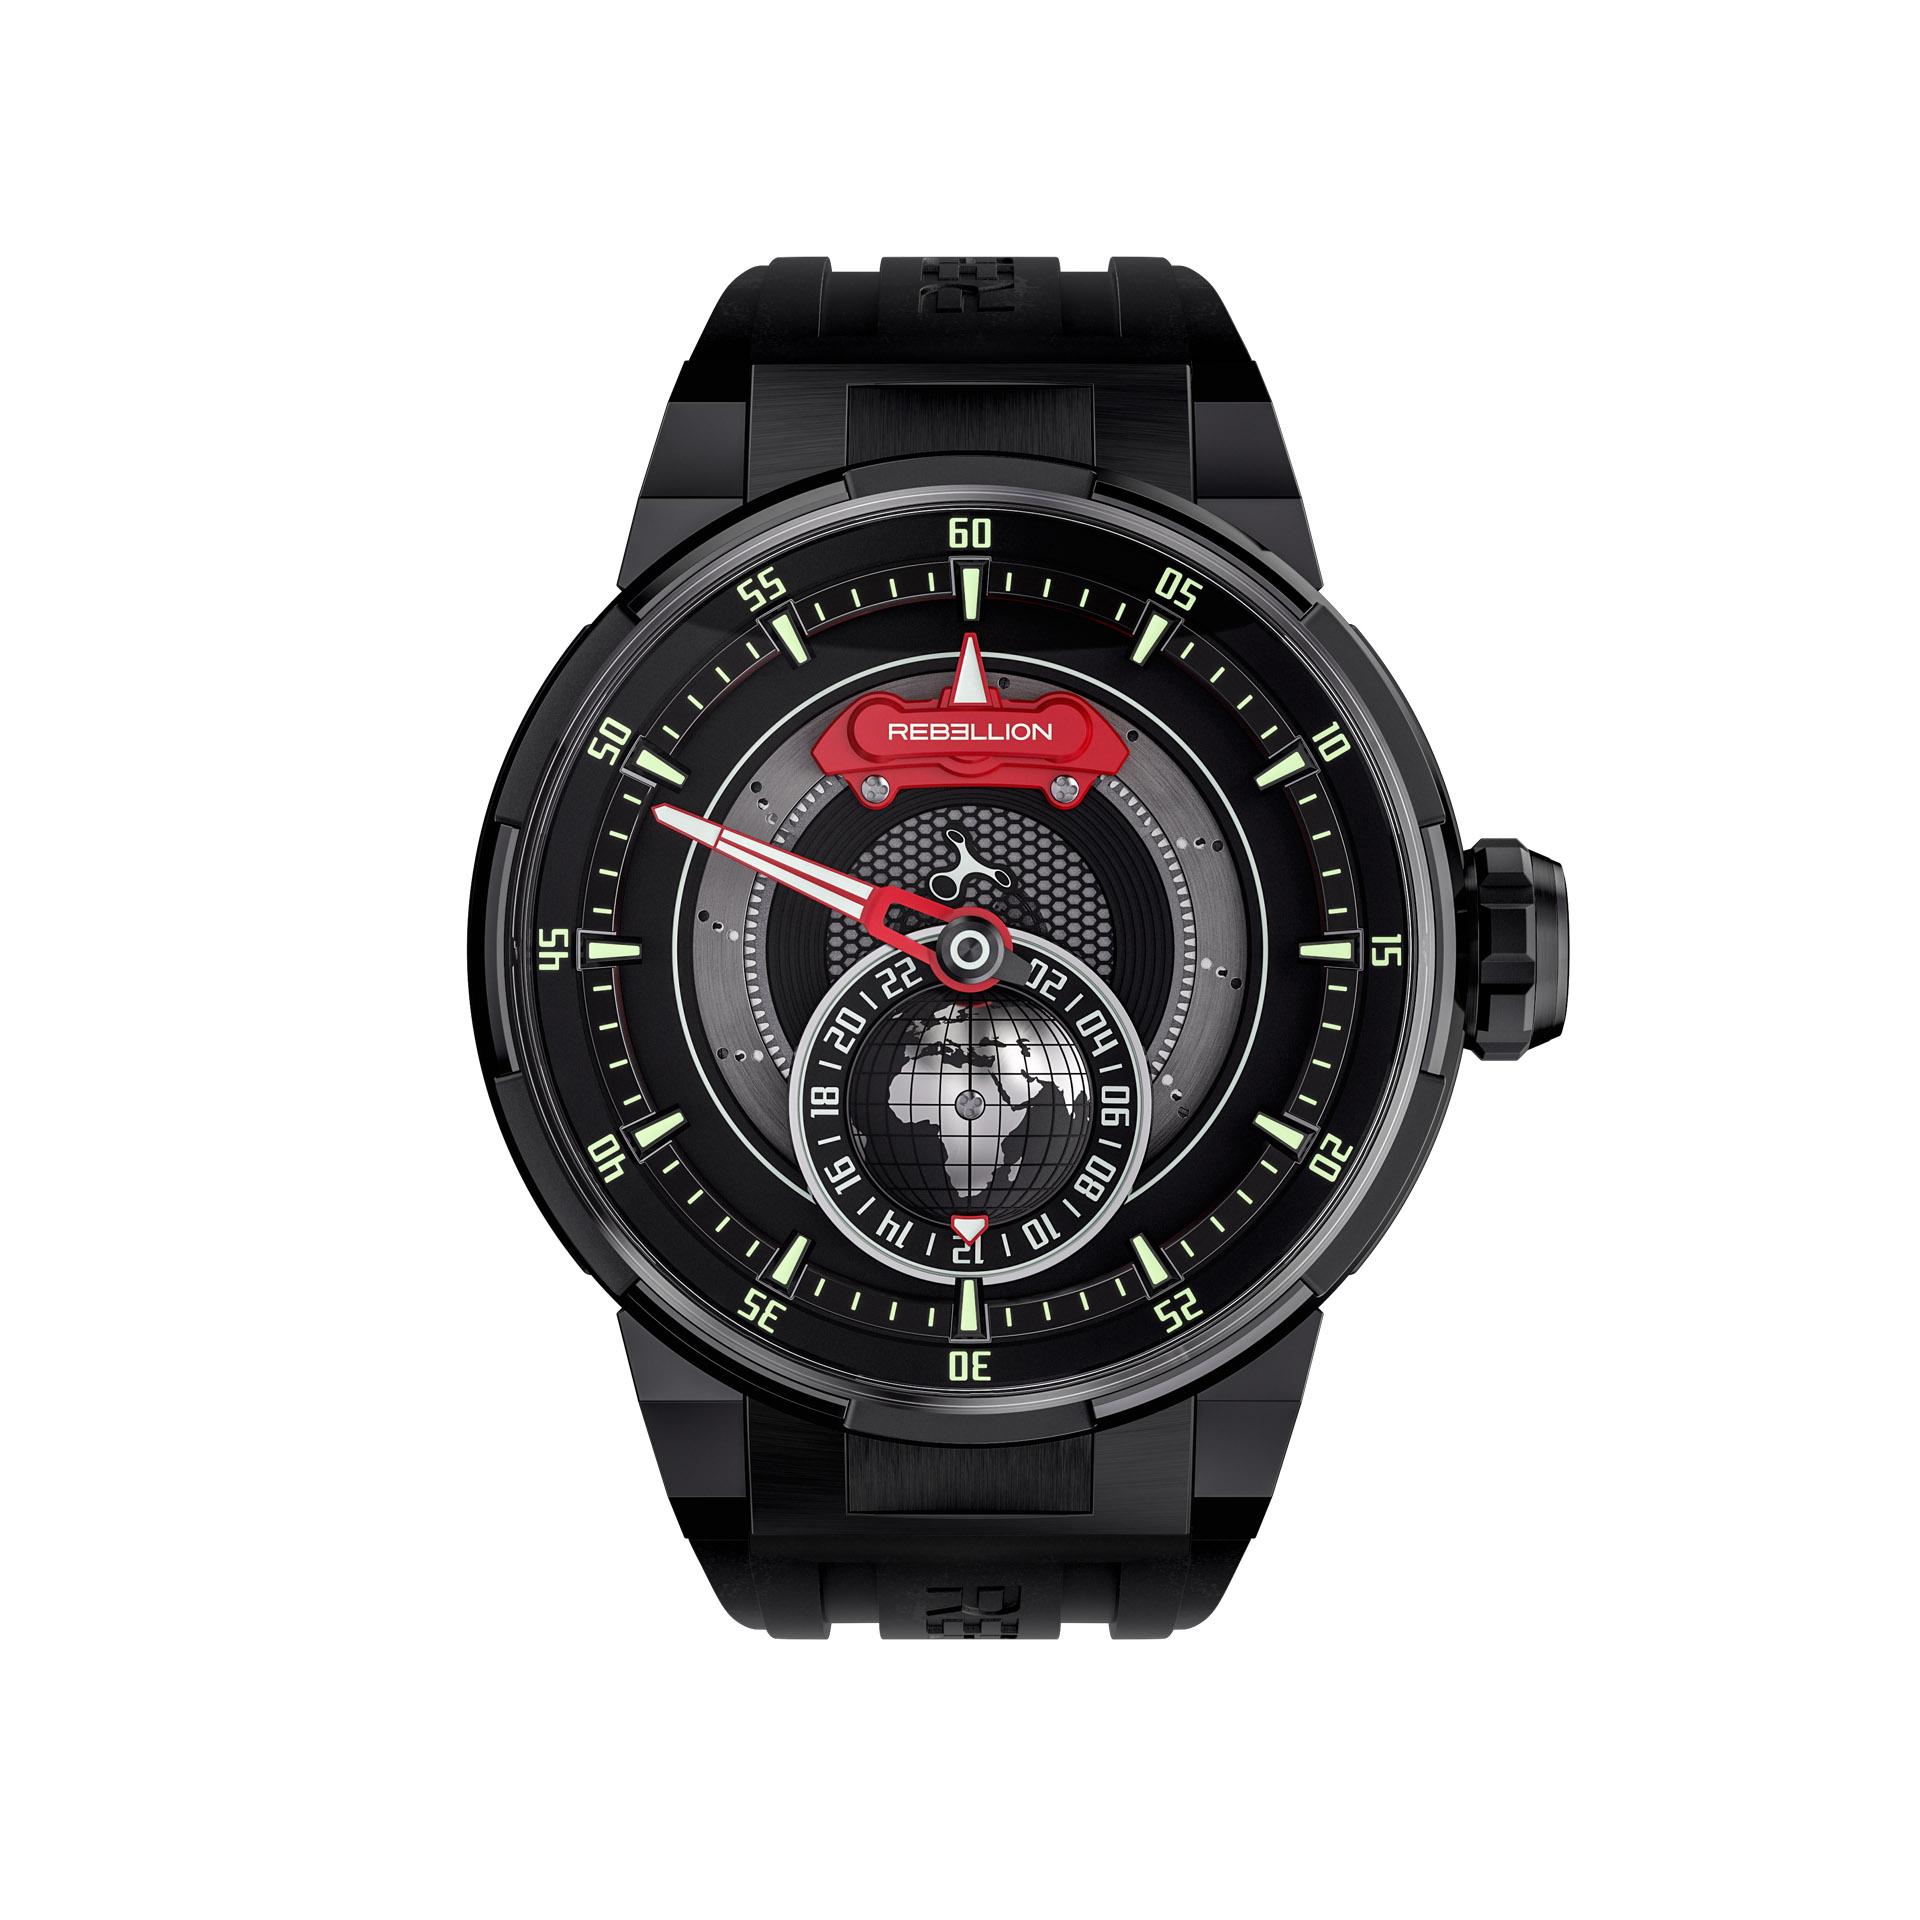 Rebellion Twenty One / GMT - Dual Time Zone Automatic Watch for sale online  | eBay